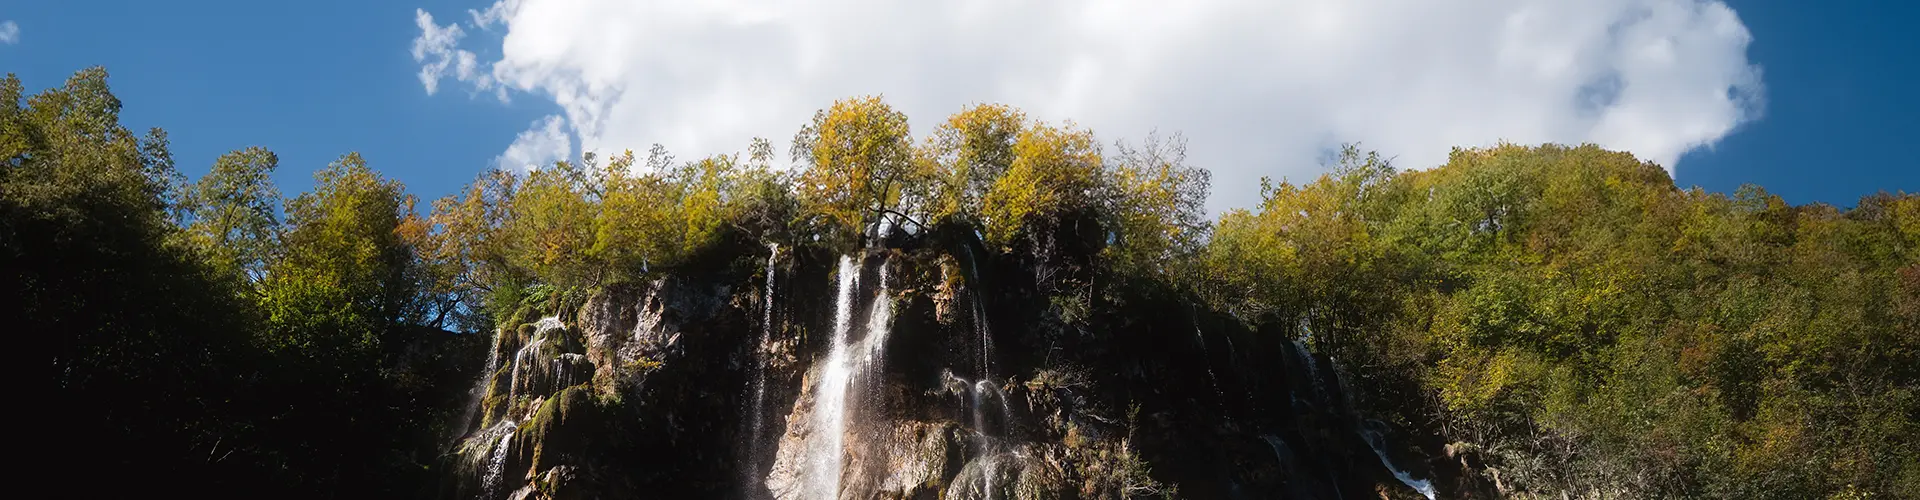 Plitvice highest waterfall, Croatia